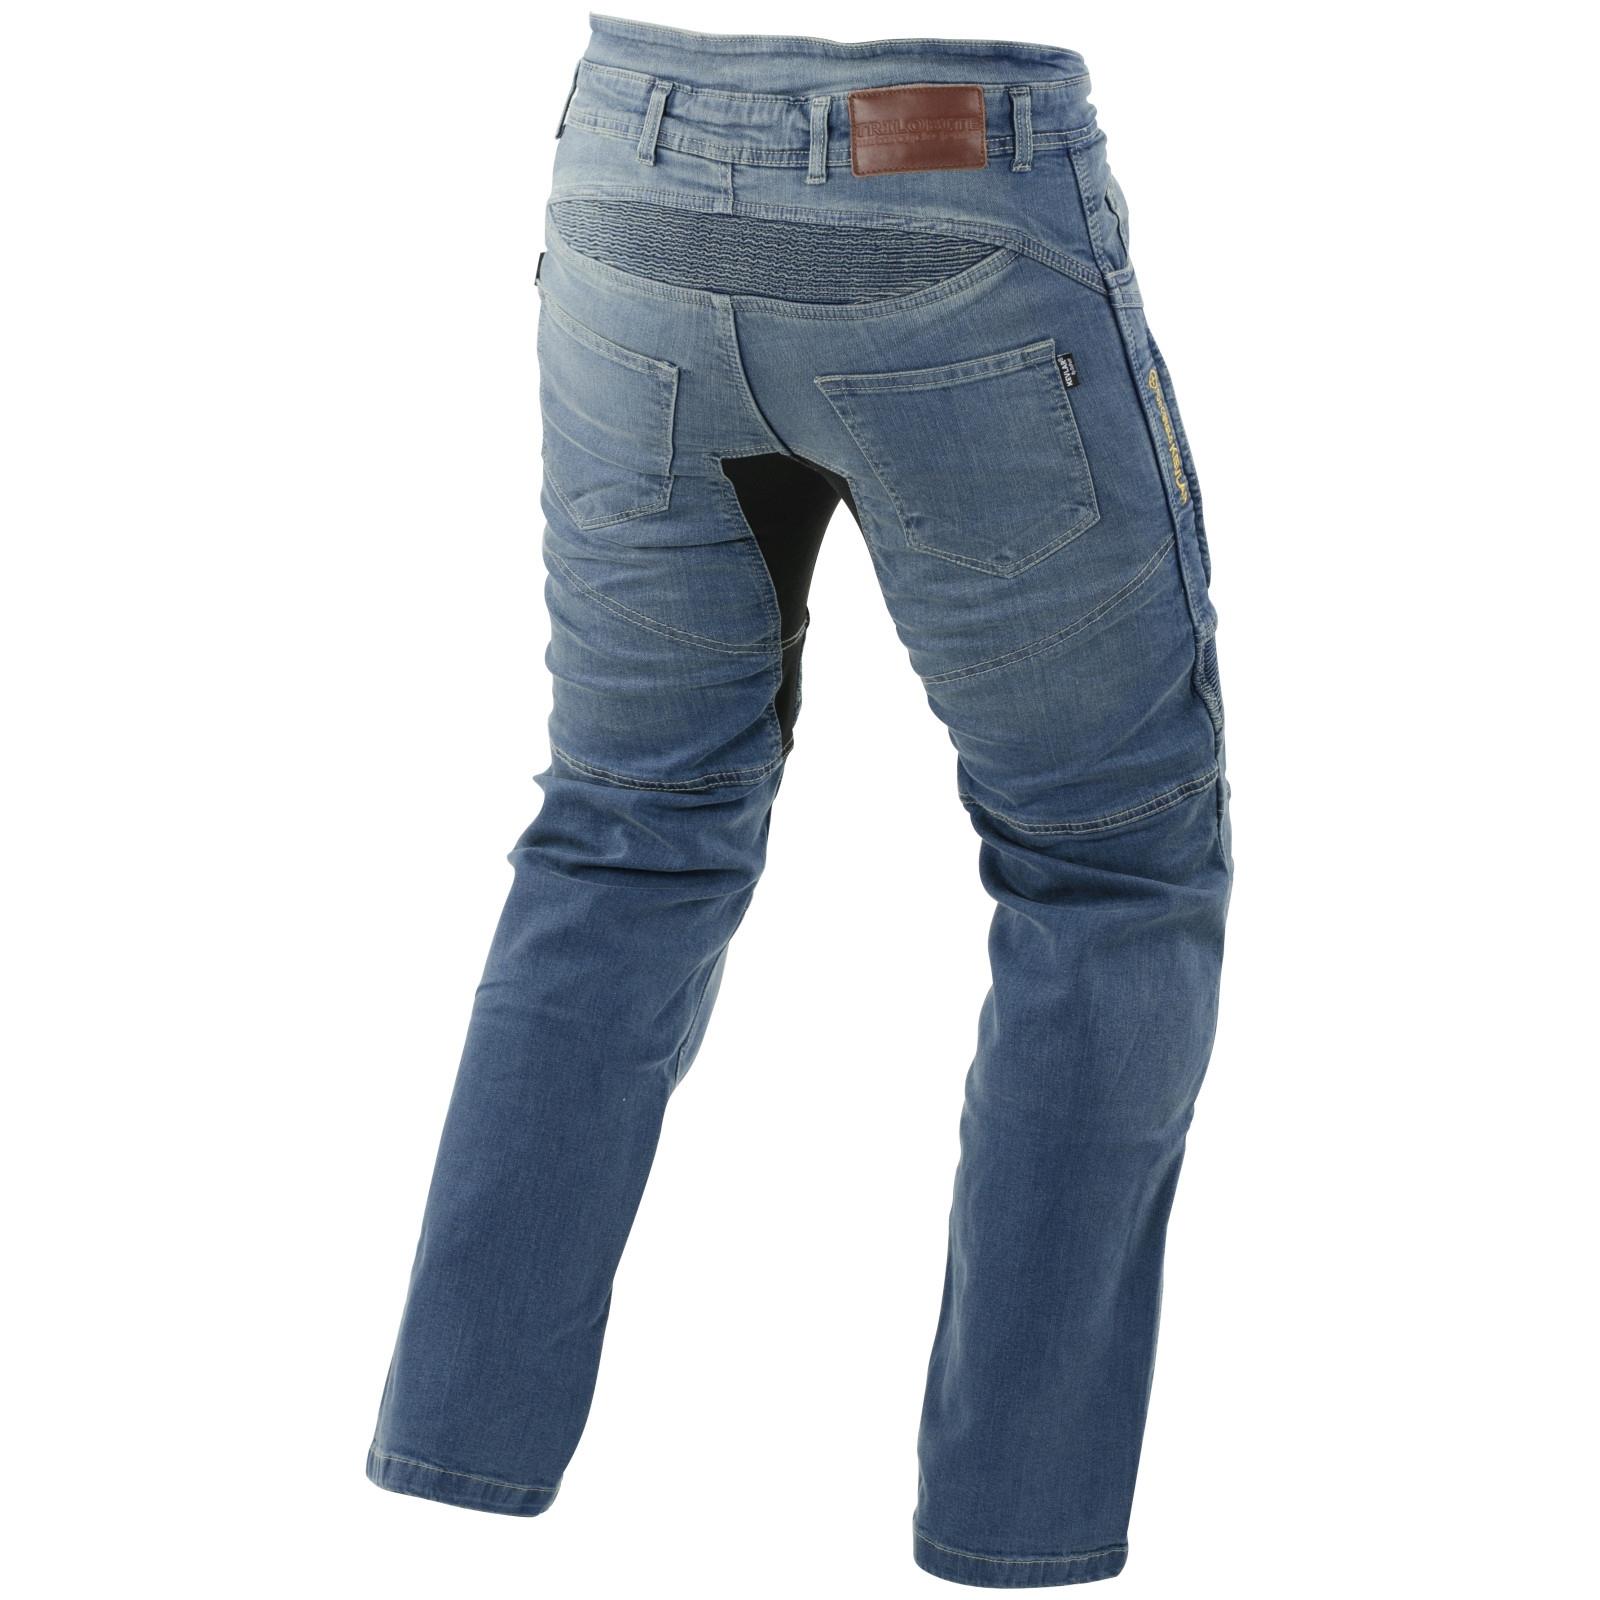 Trilobite Lighted Motorcycle Jeans Pants L30 Blue Men's Stretch ...